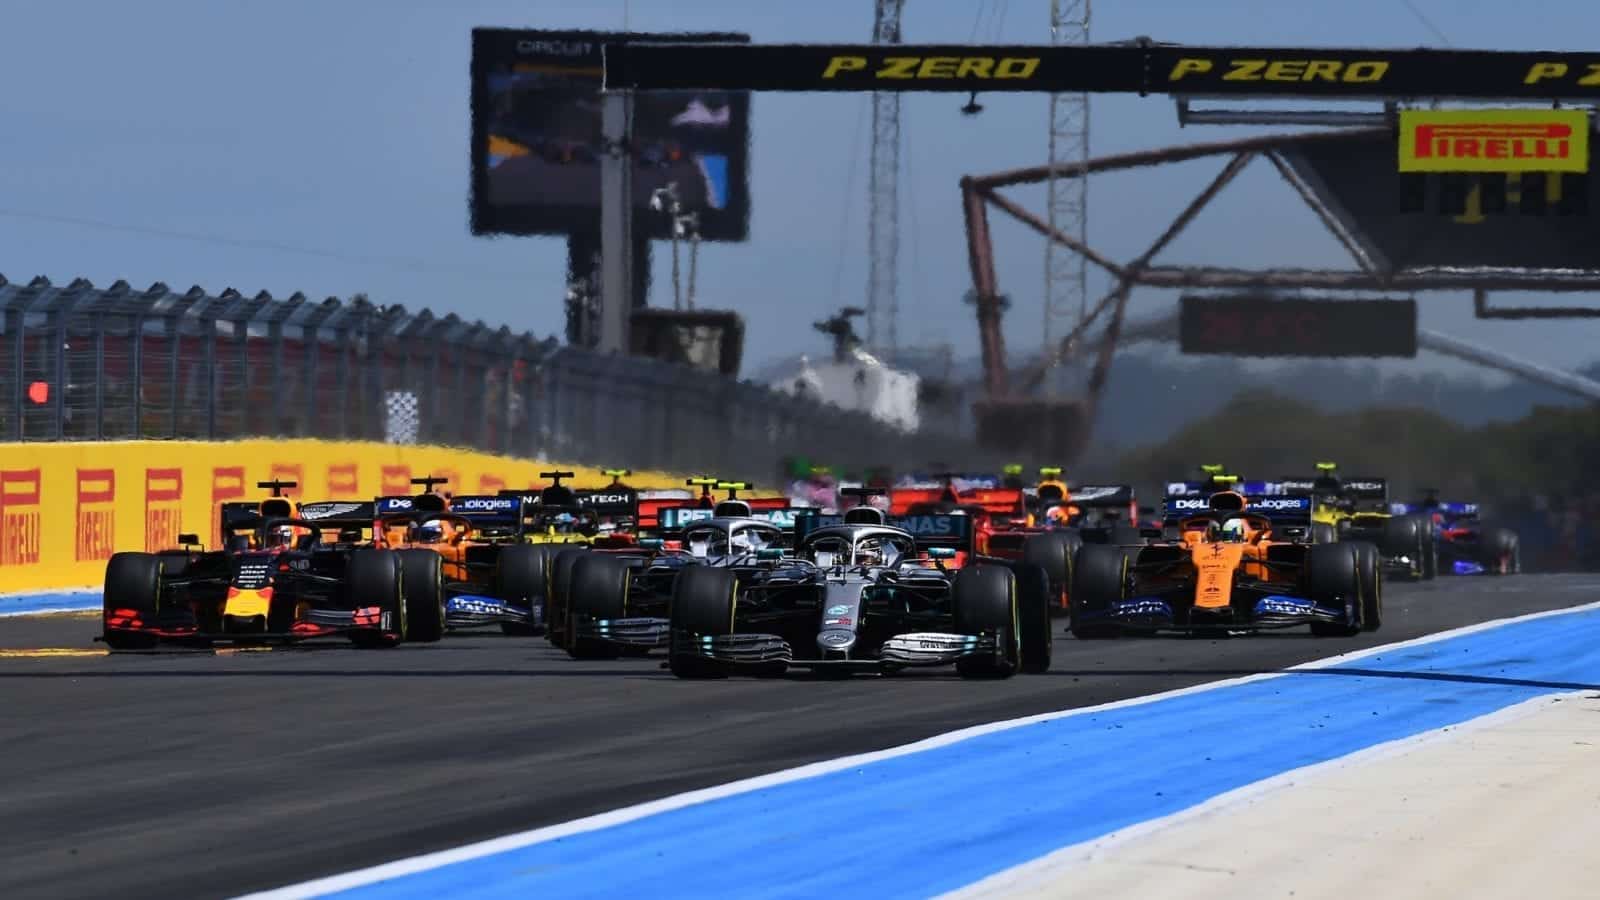 2019 French GP race start